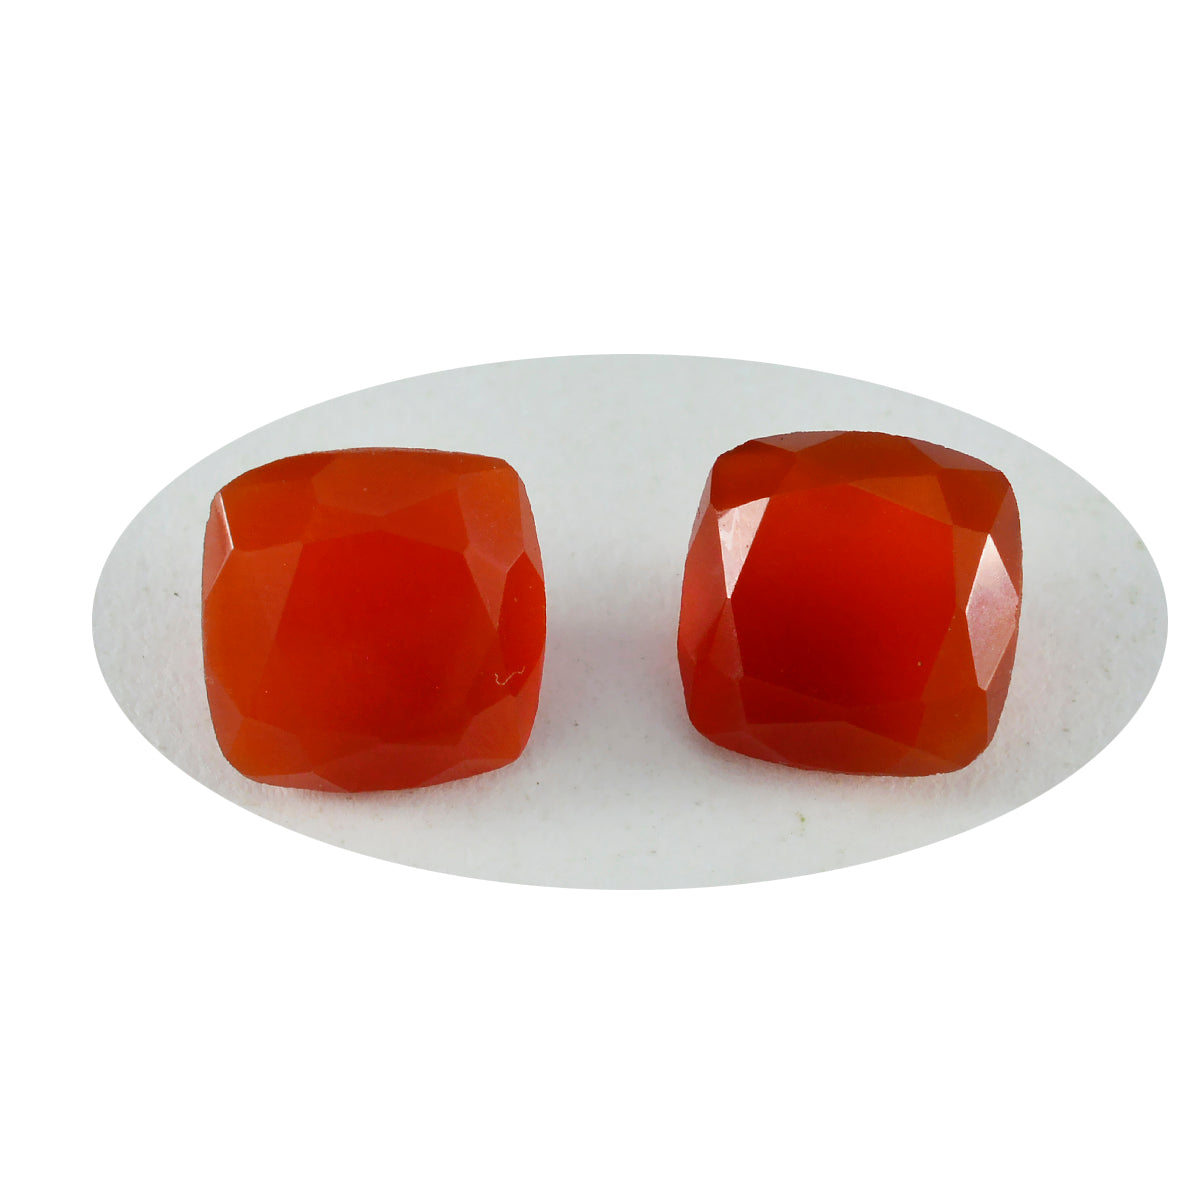 Riyogems 1PC Natural Red Onyx Faceted 8x8 mm Cushion Shape pretty Quality Gems